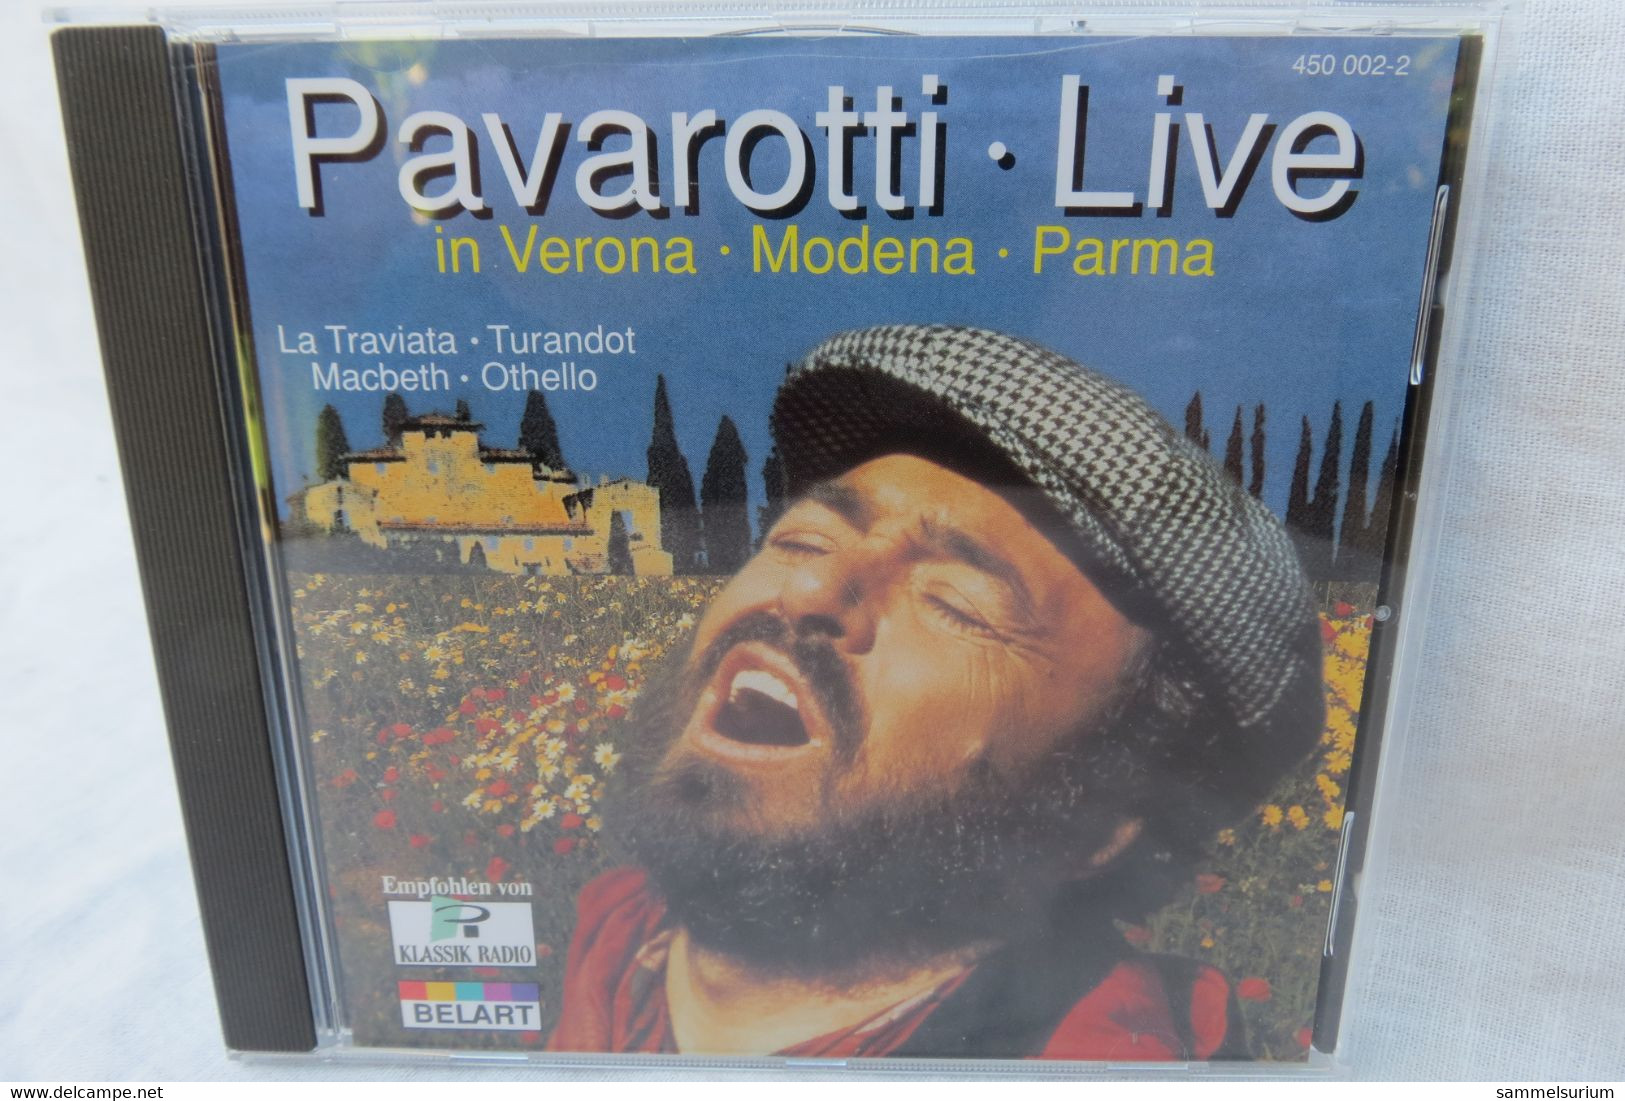 CD "Pavarotti" Live In Verona, Modena, Parma, La Traviata, Turandot, Macbeth, Othello - Opera